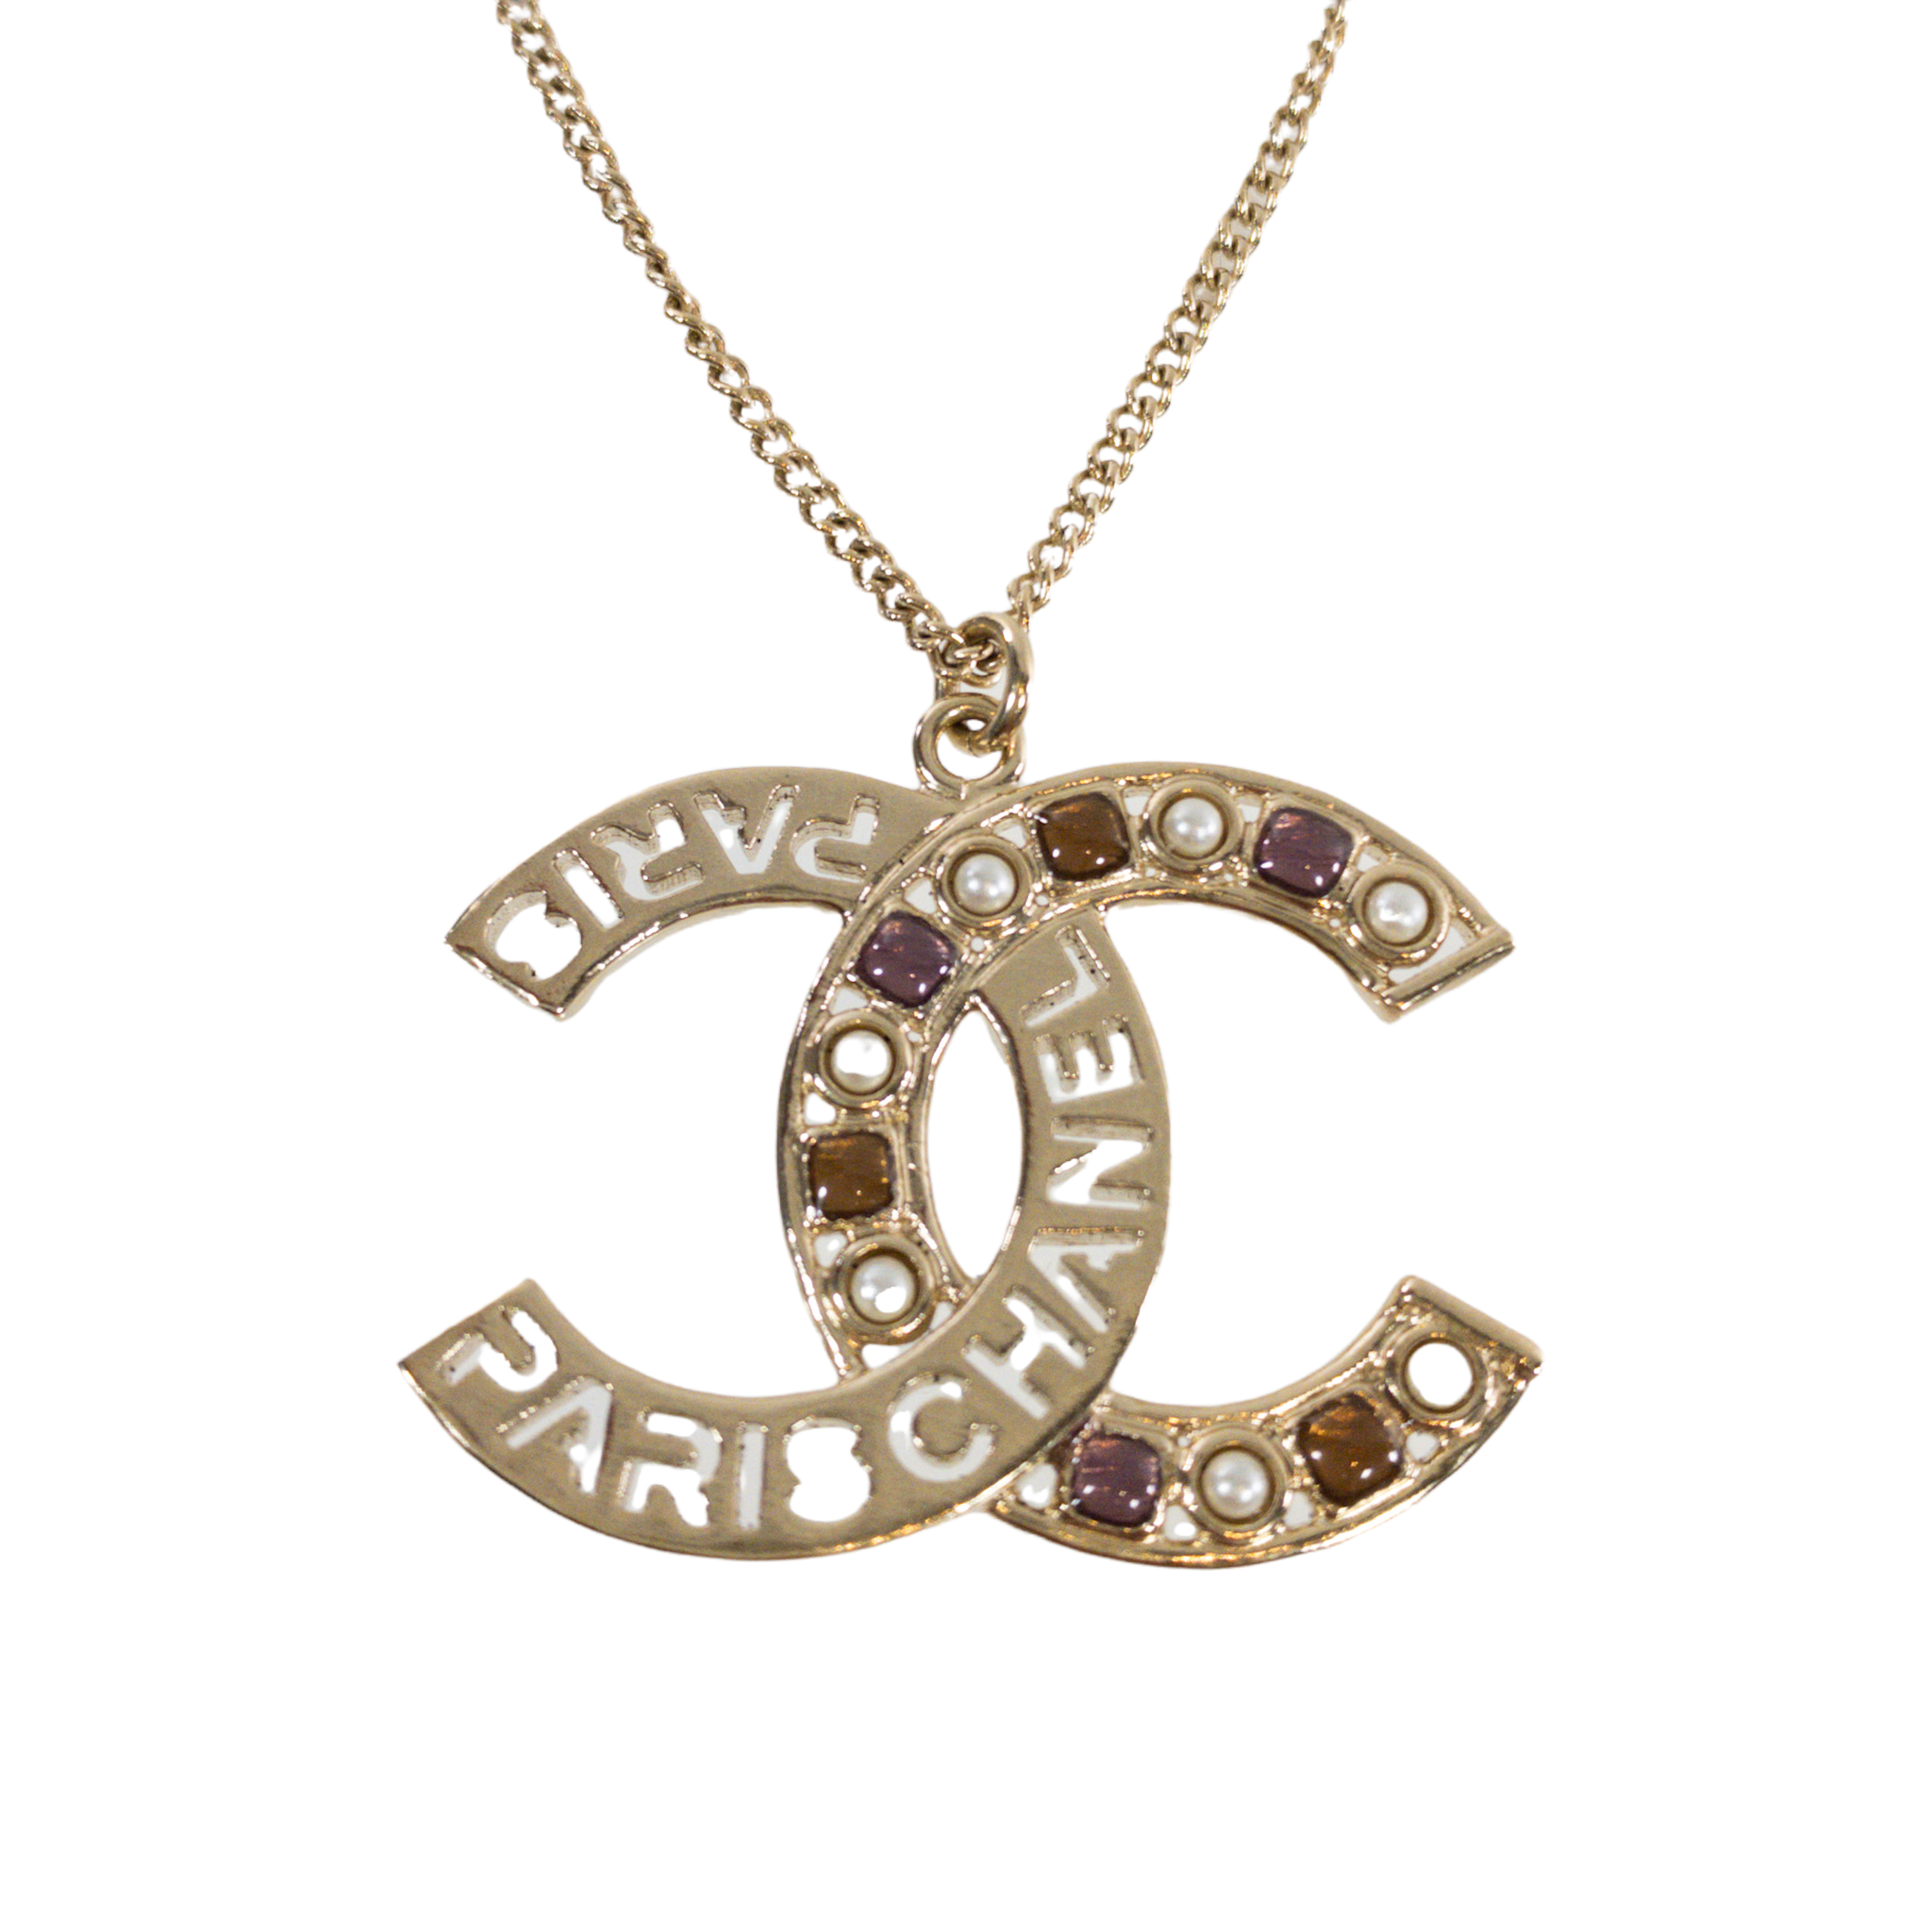 Chanel Paris Gold CC Necklace with Stones